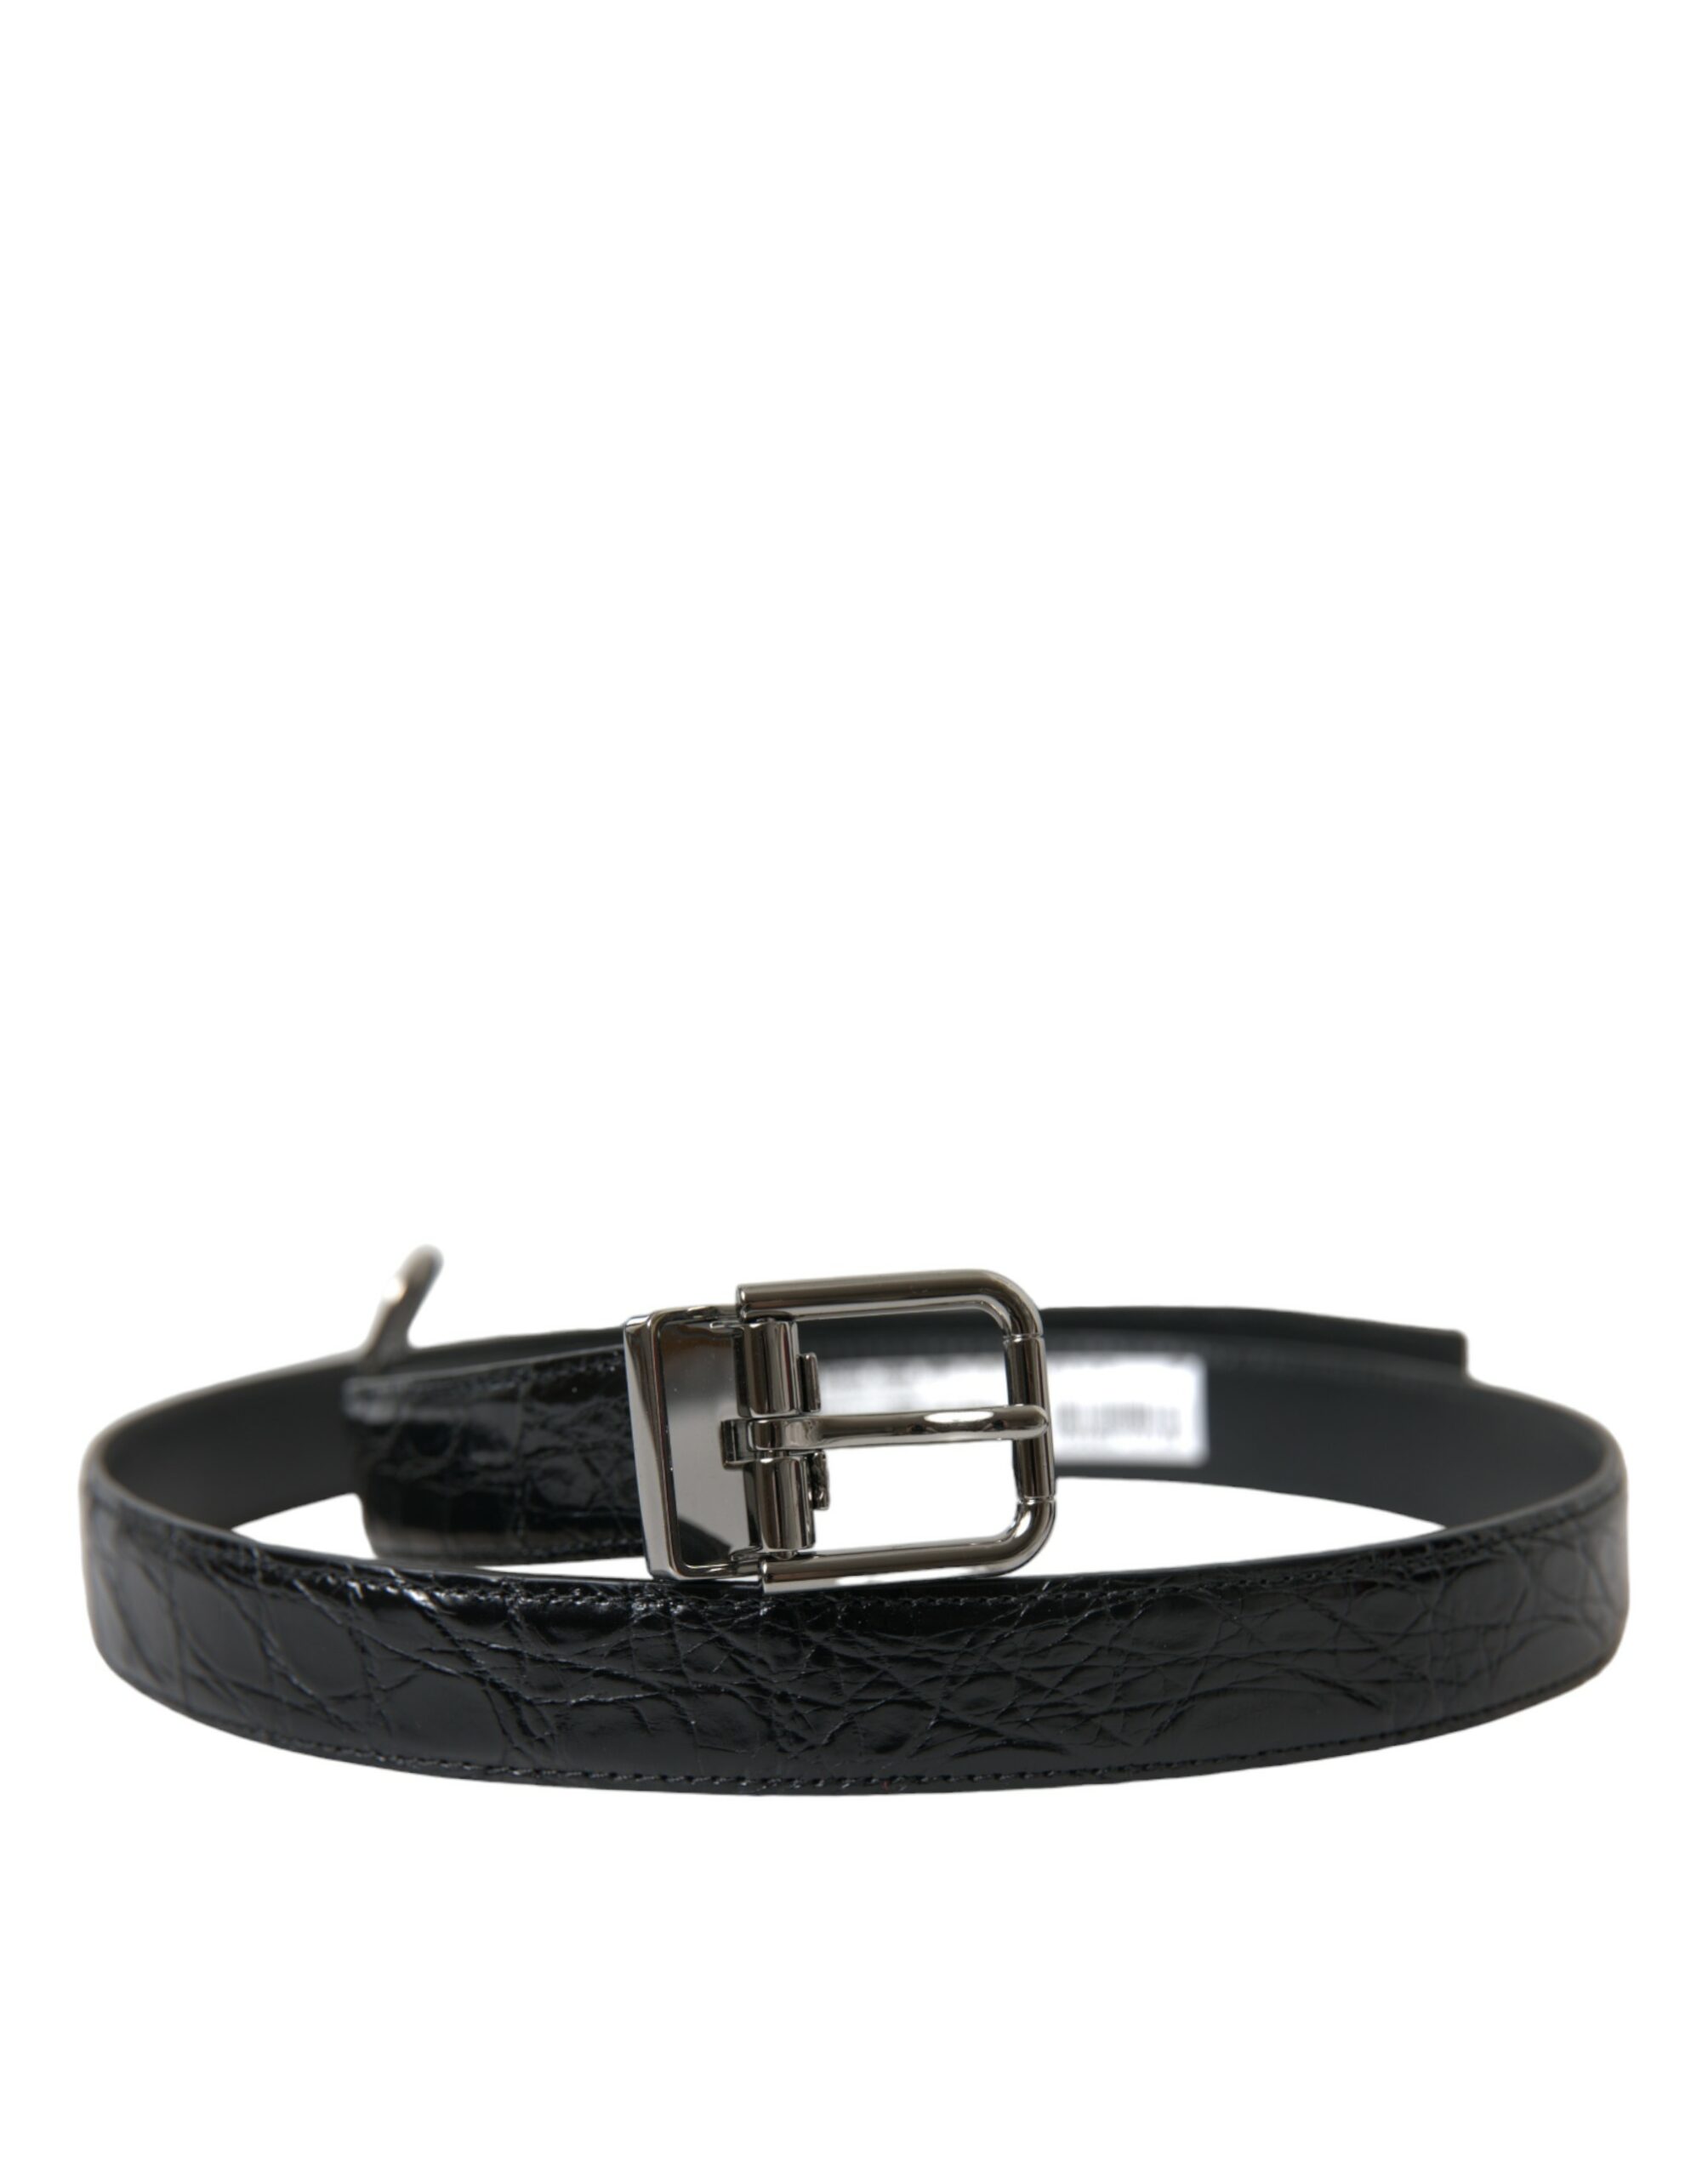 Black Dolce & Gabbana Black Leather Silver Metal Buckle Belt 90 cm / 36 Inches